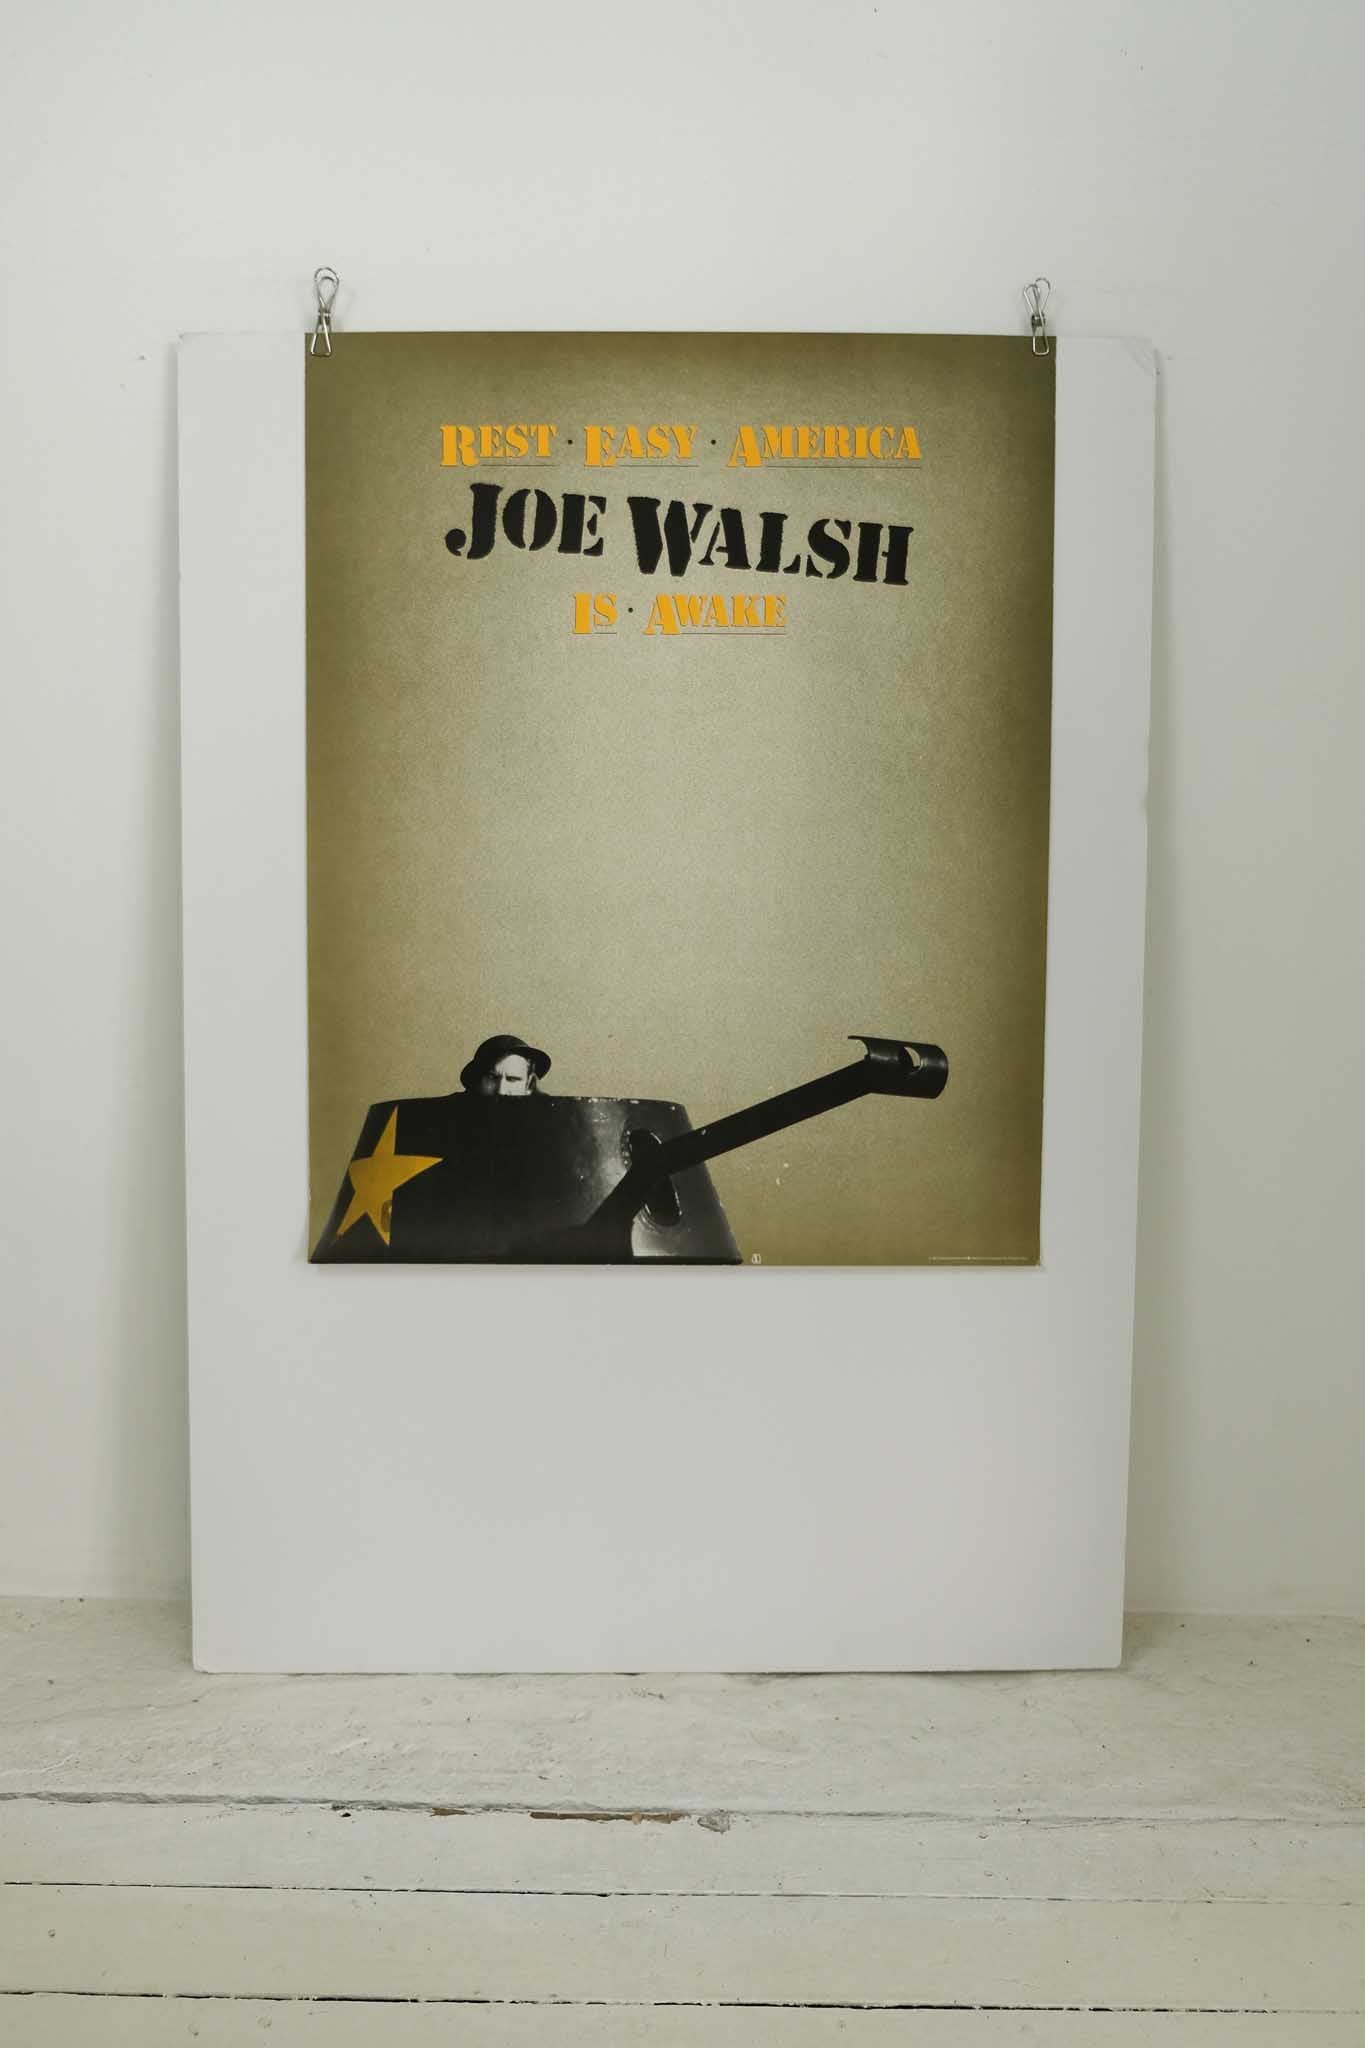 Joe Walsh Rest East America Is Awake Print